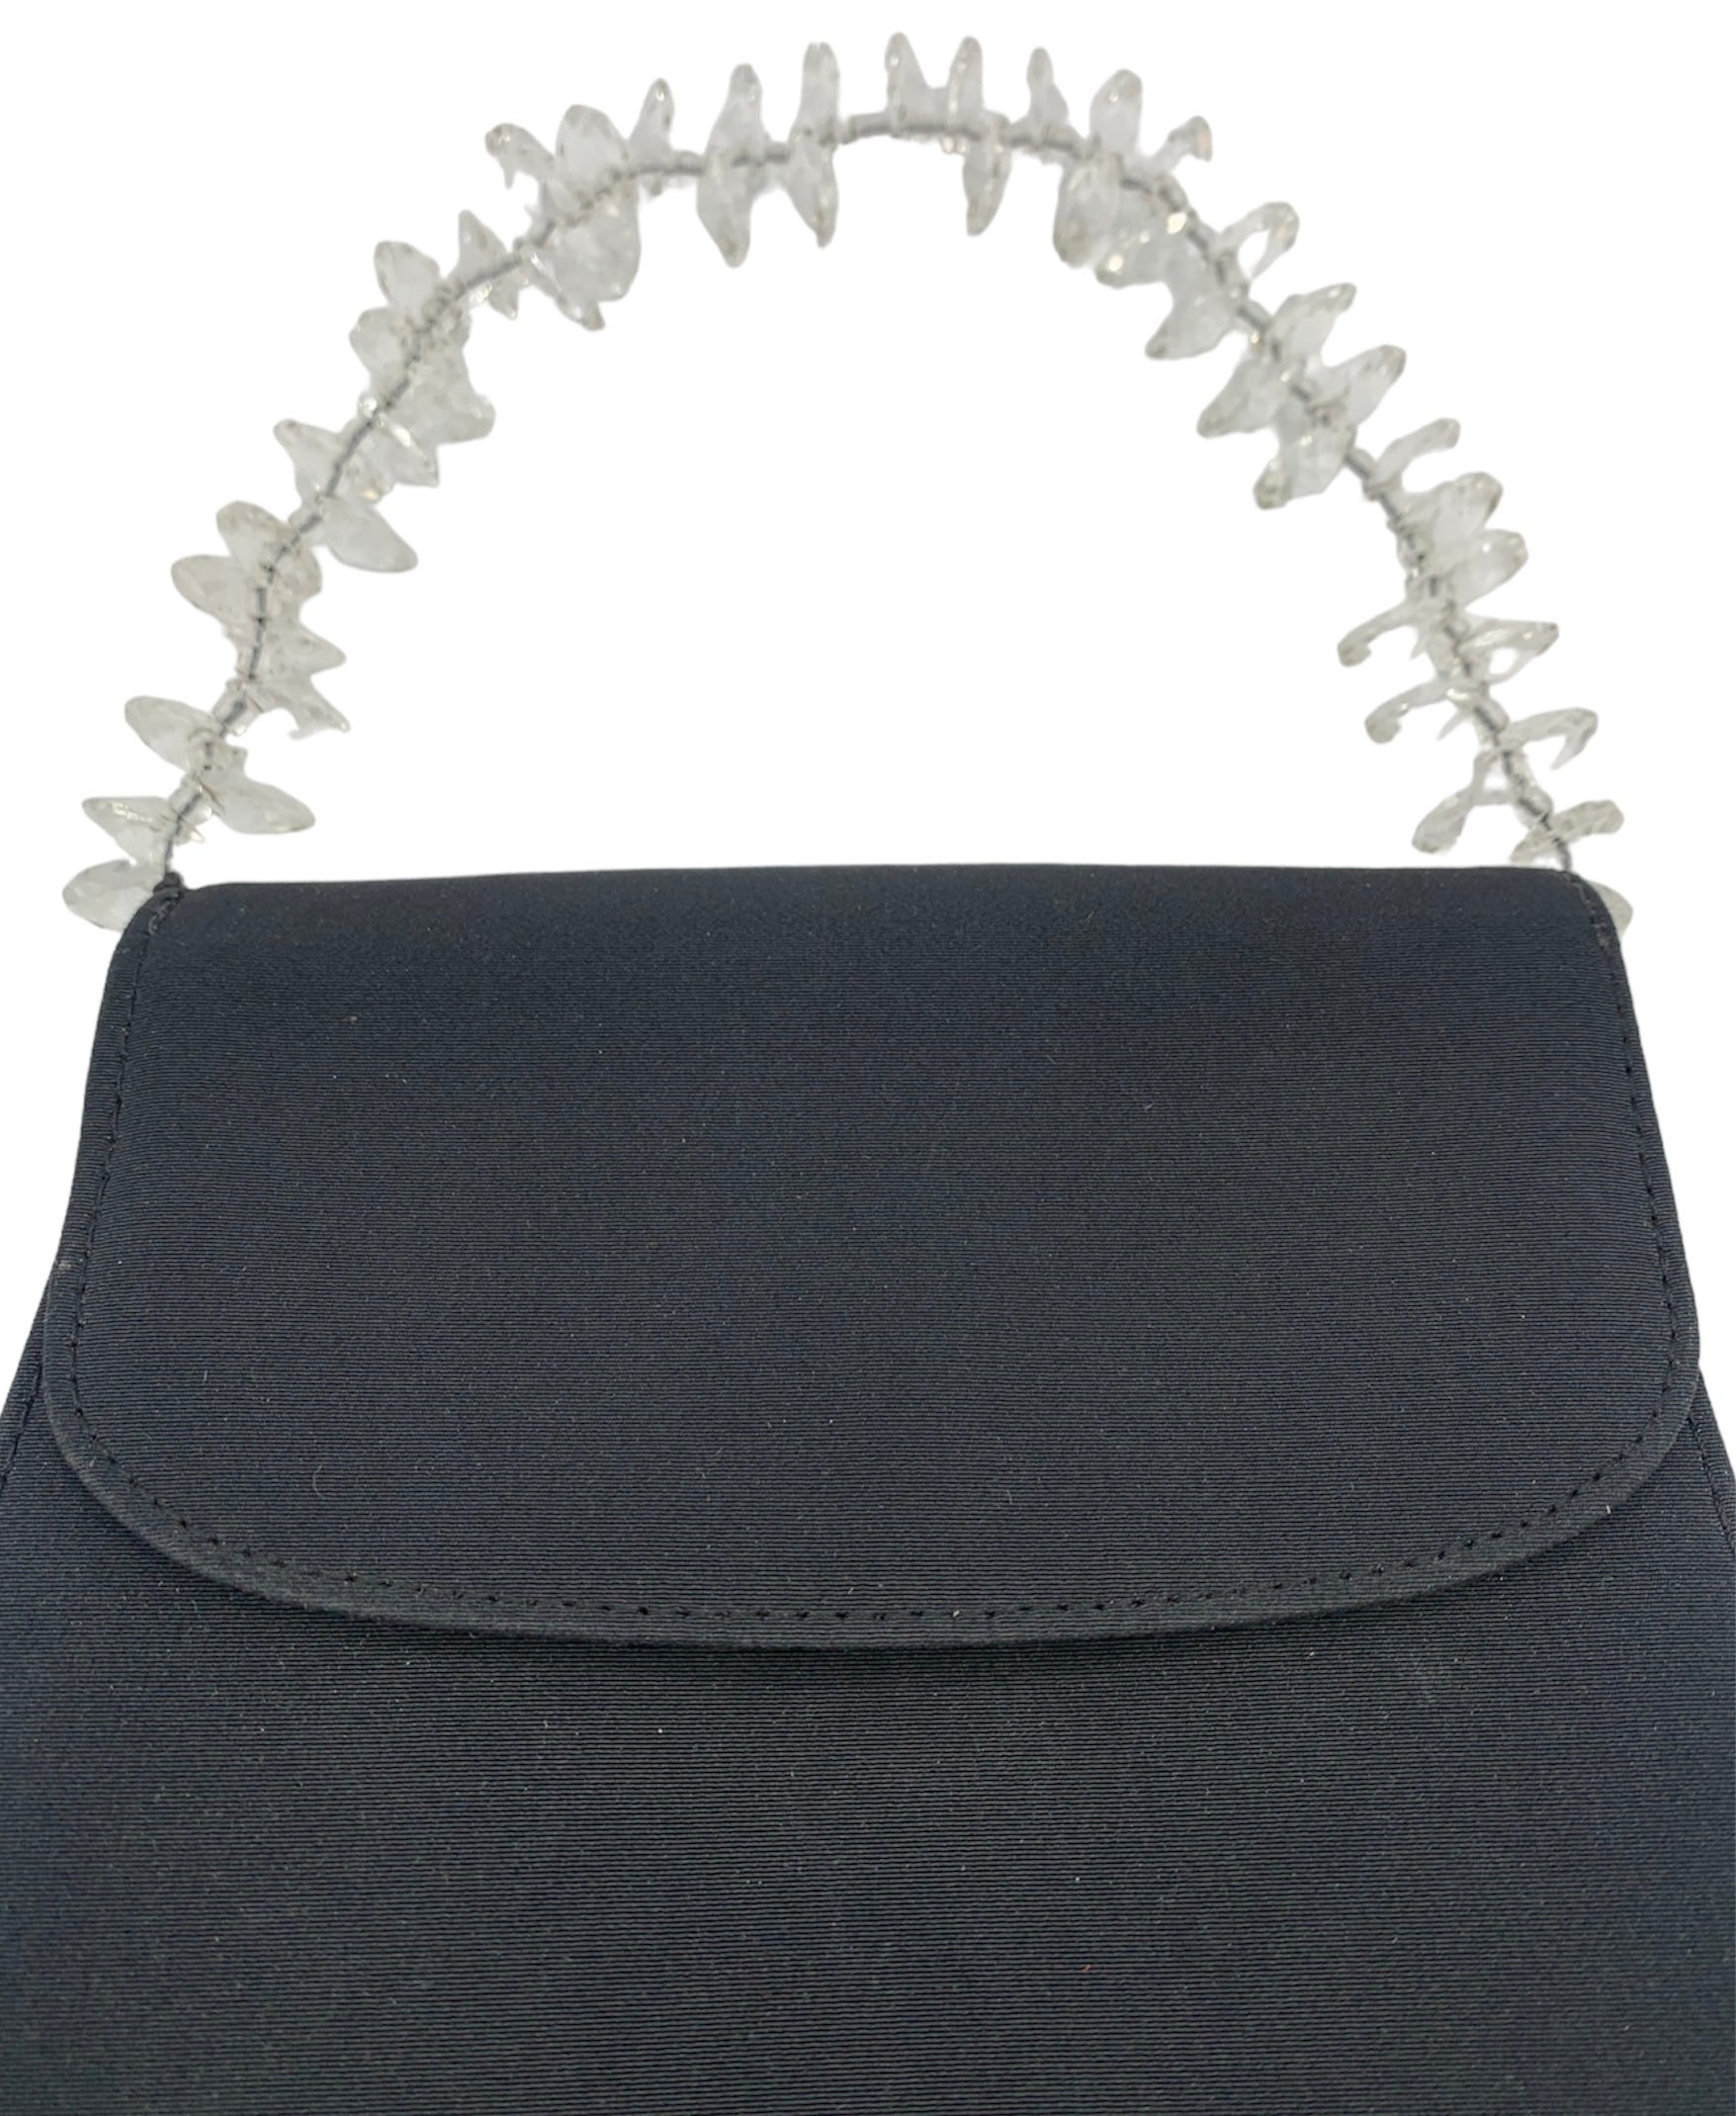 Casadei Black Satin Bag with Simulated Crystal Handle, close up